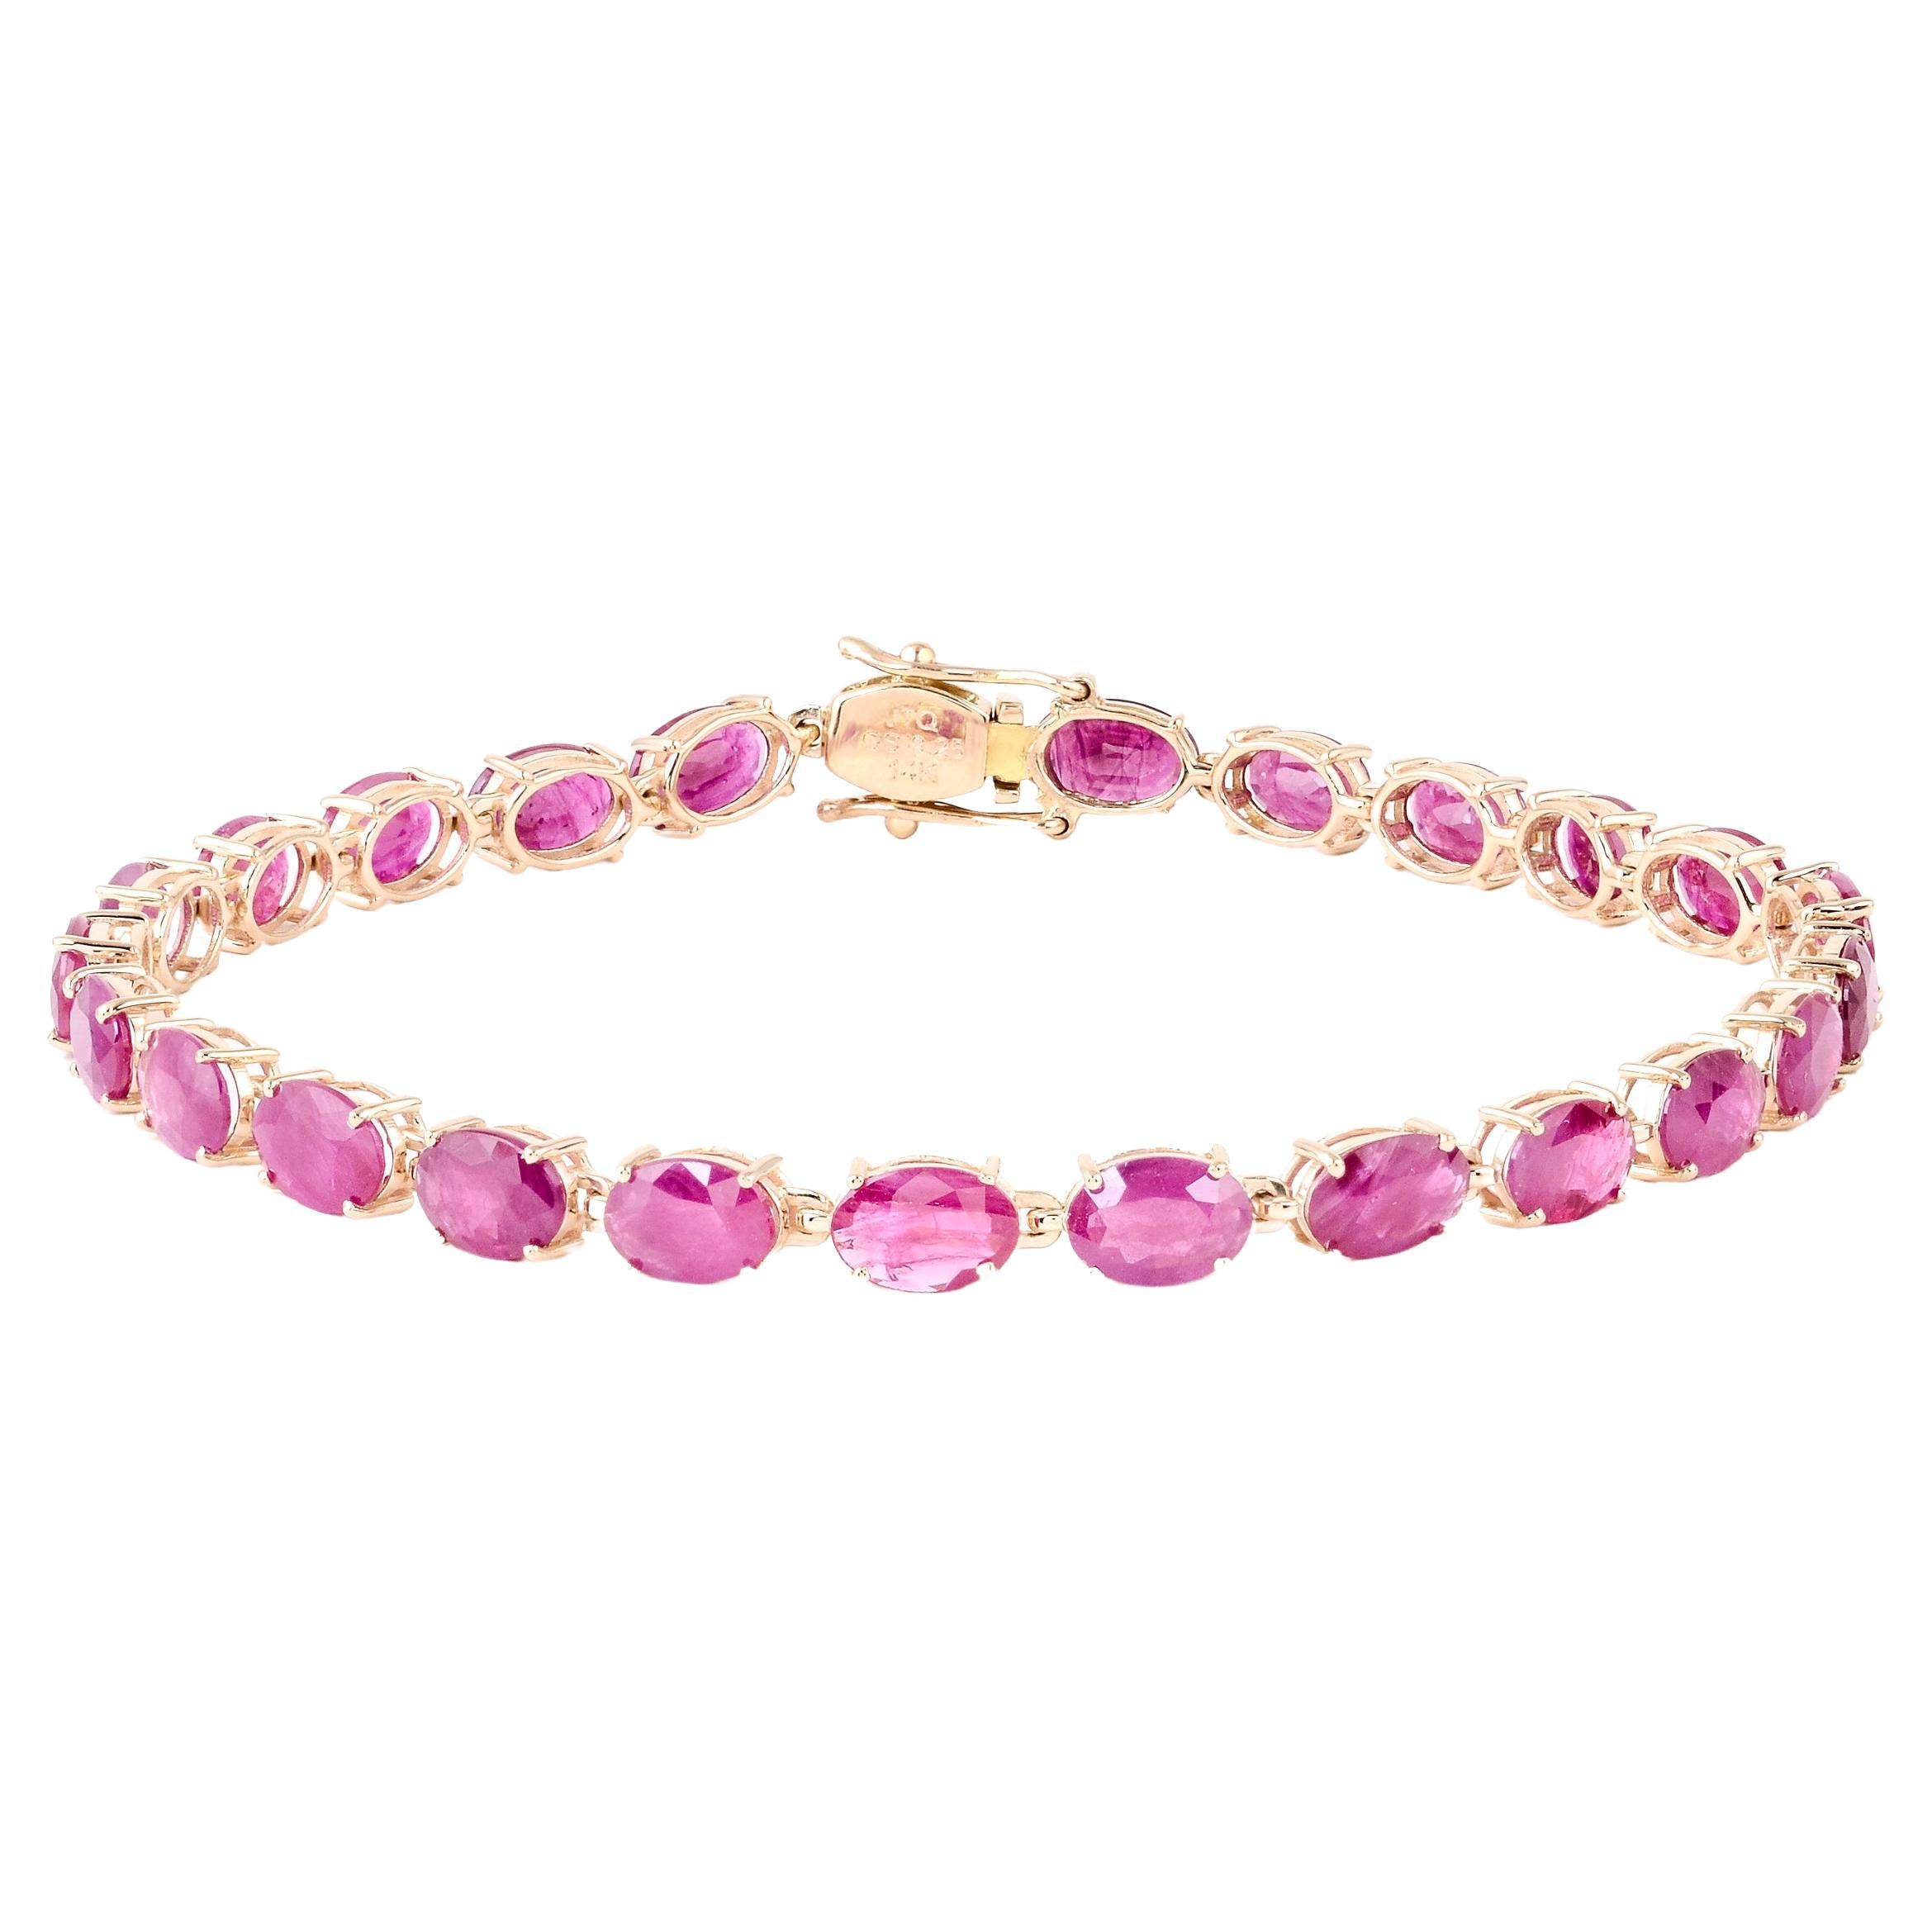 14K 8.40ctw Ruby Link Bracelet - Exquisite Gemstone Elegance, Timeless Luxury For Sale